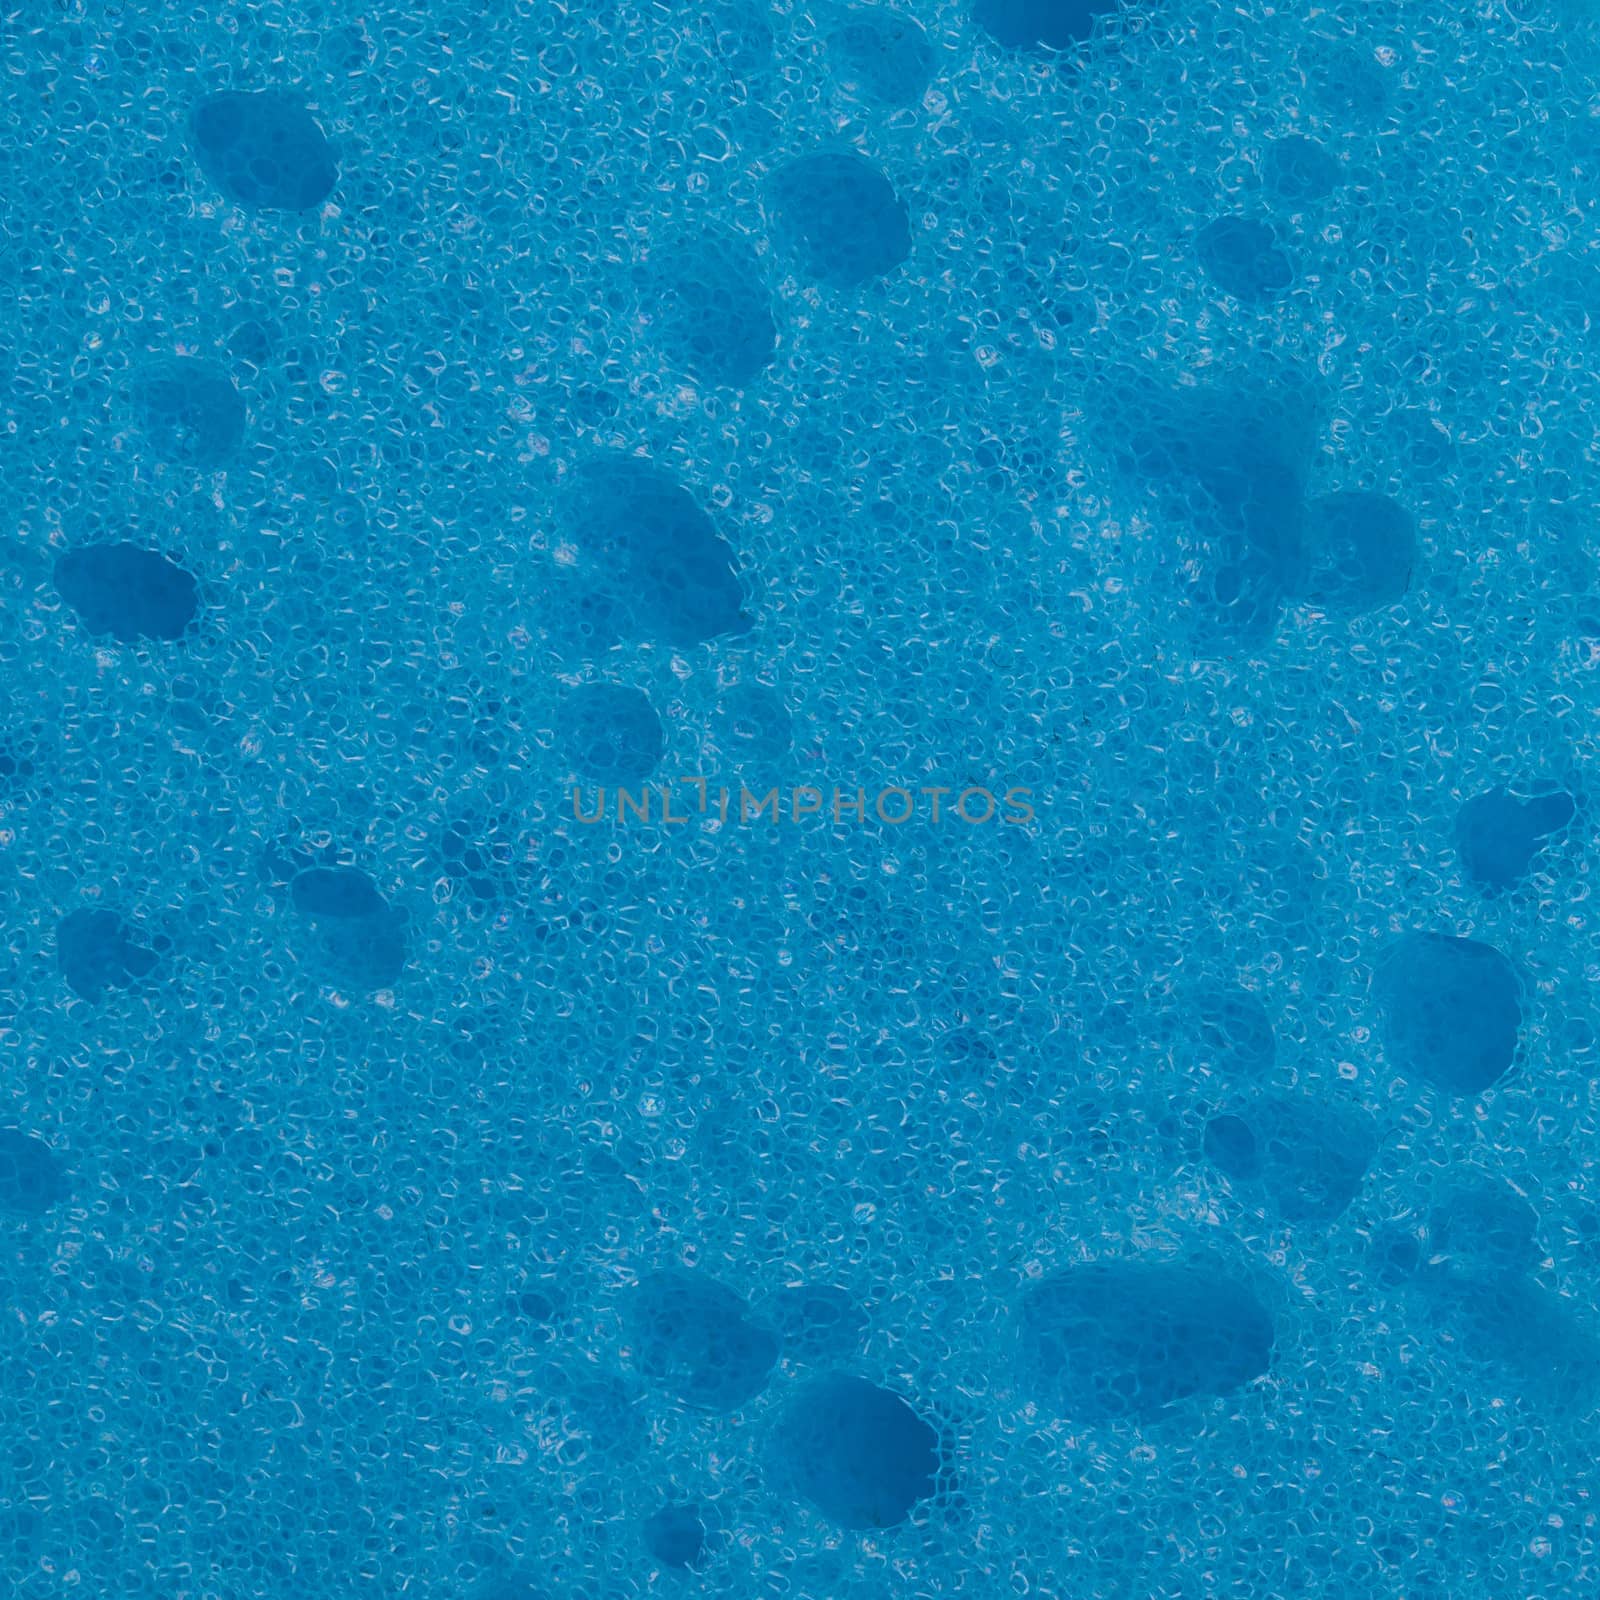 Blue sponge texture for background, close up